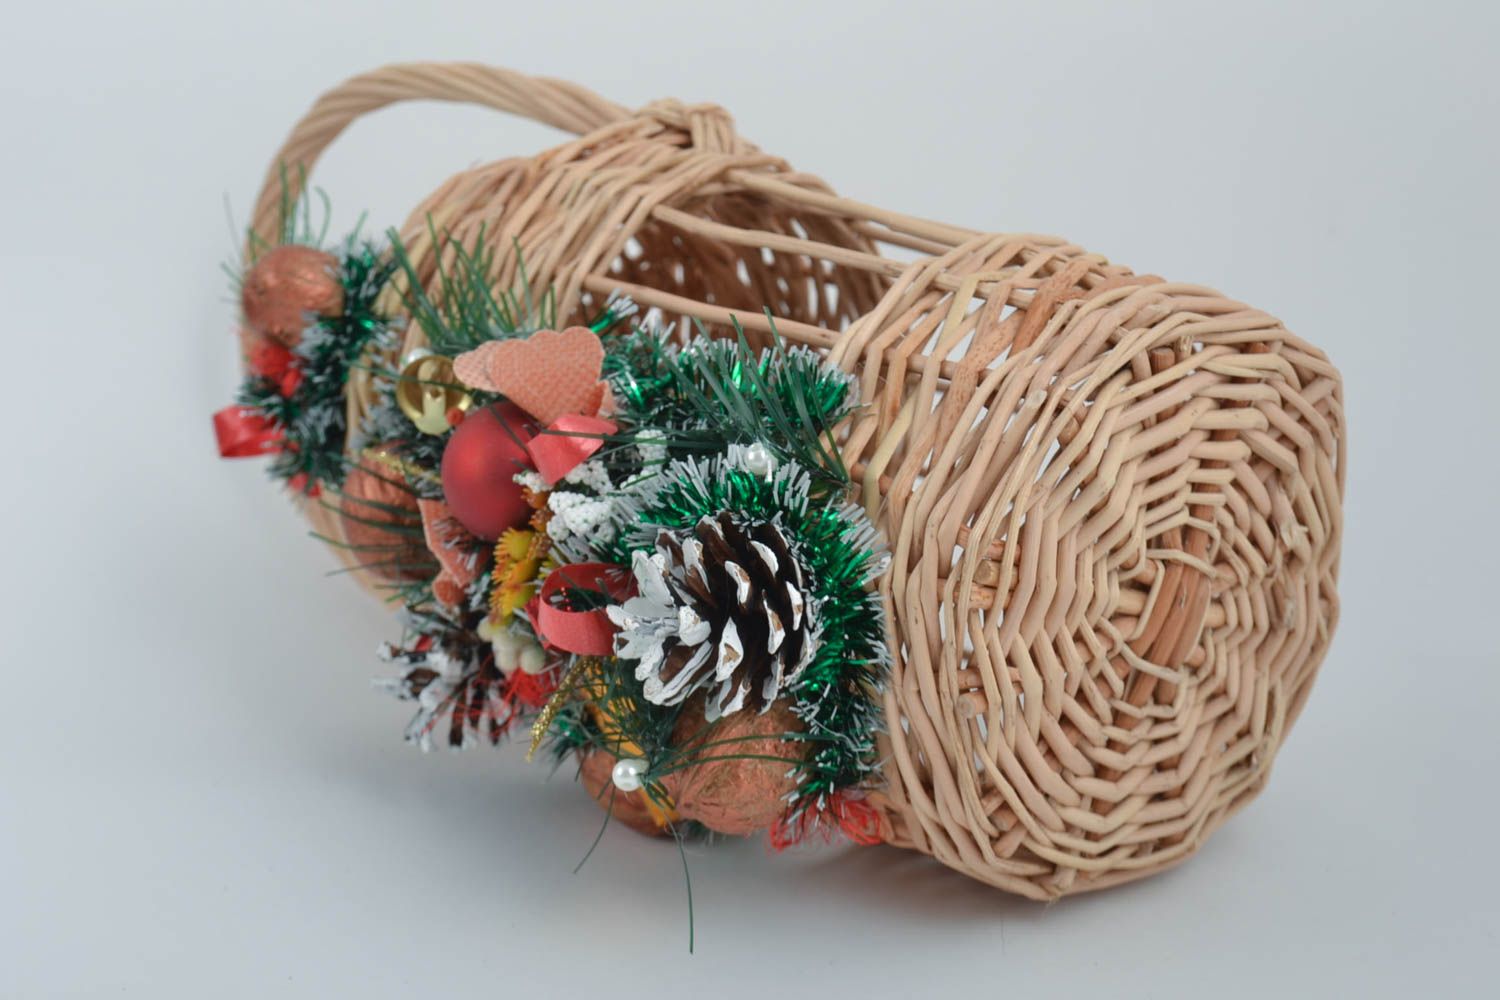 Unusual handmade woven basket Easter basket ideas designer accessories photo 3